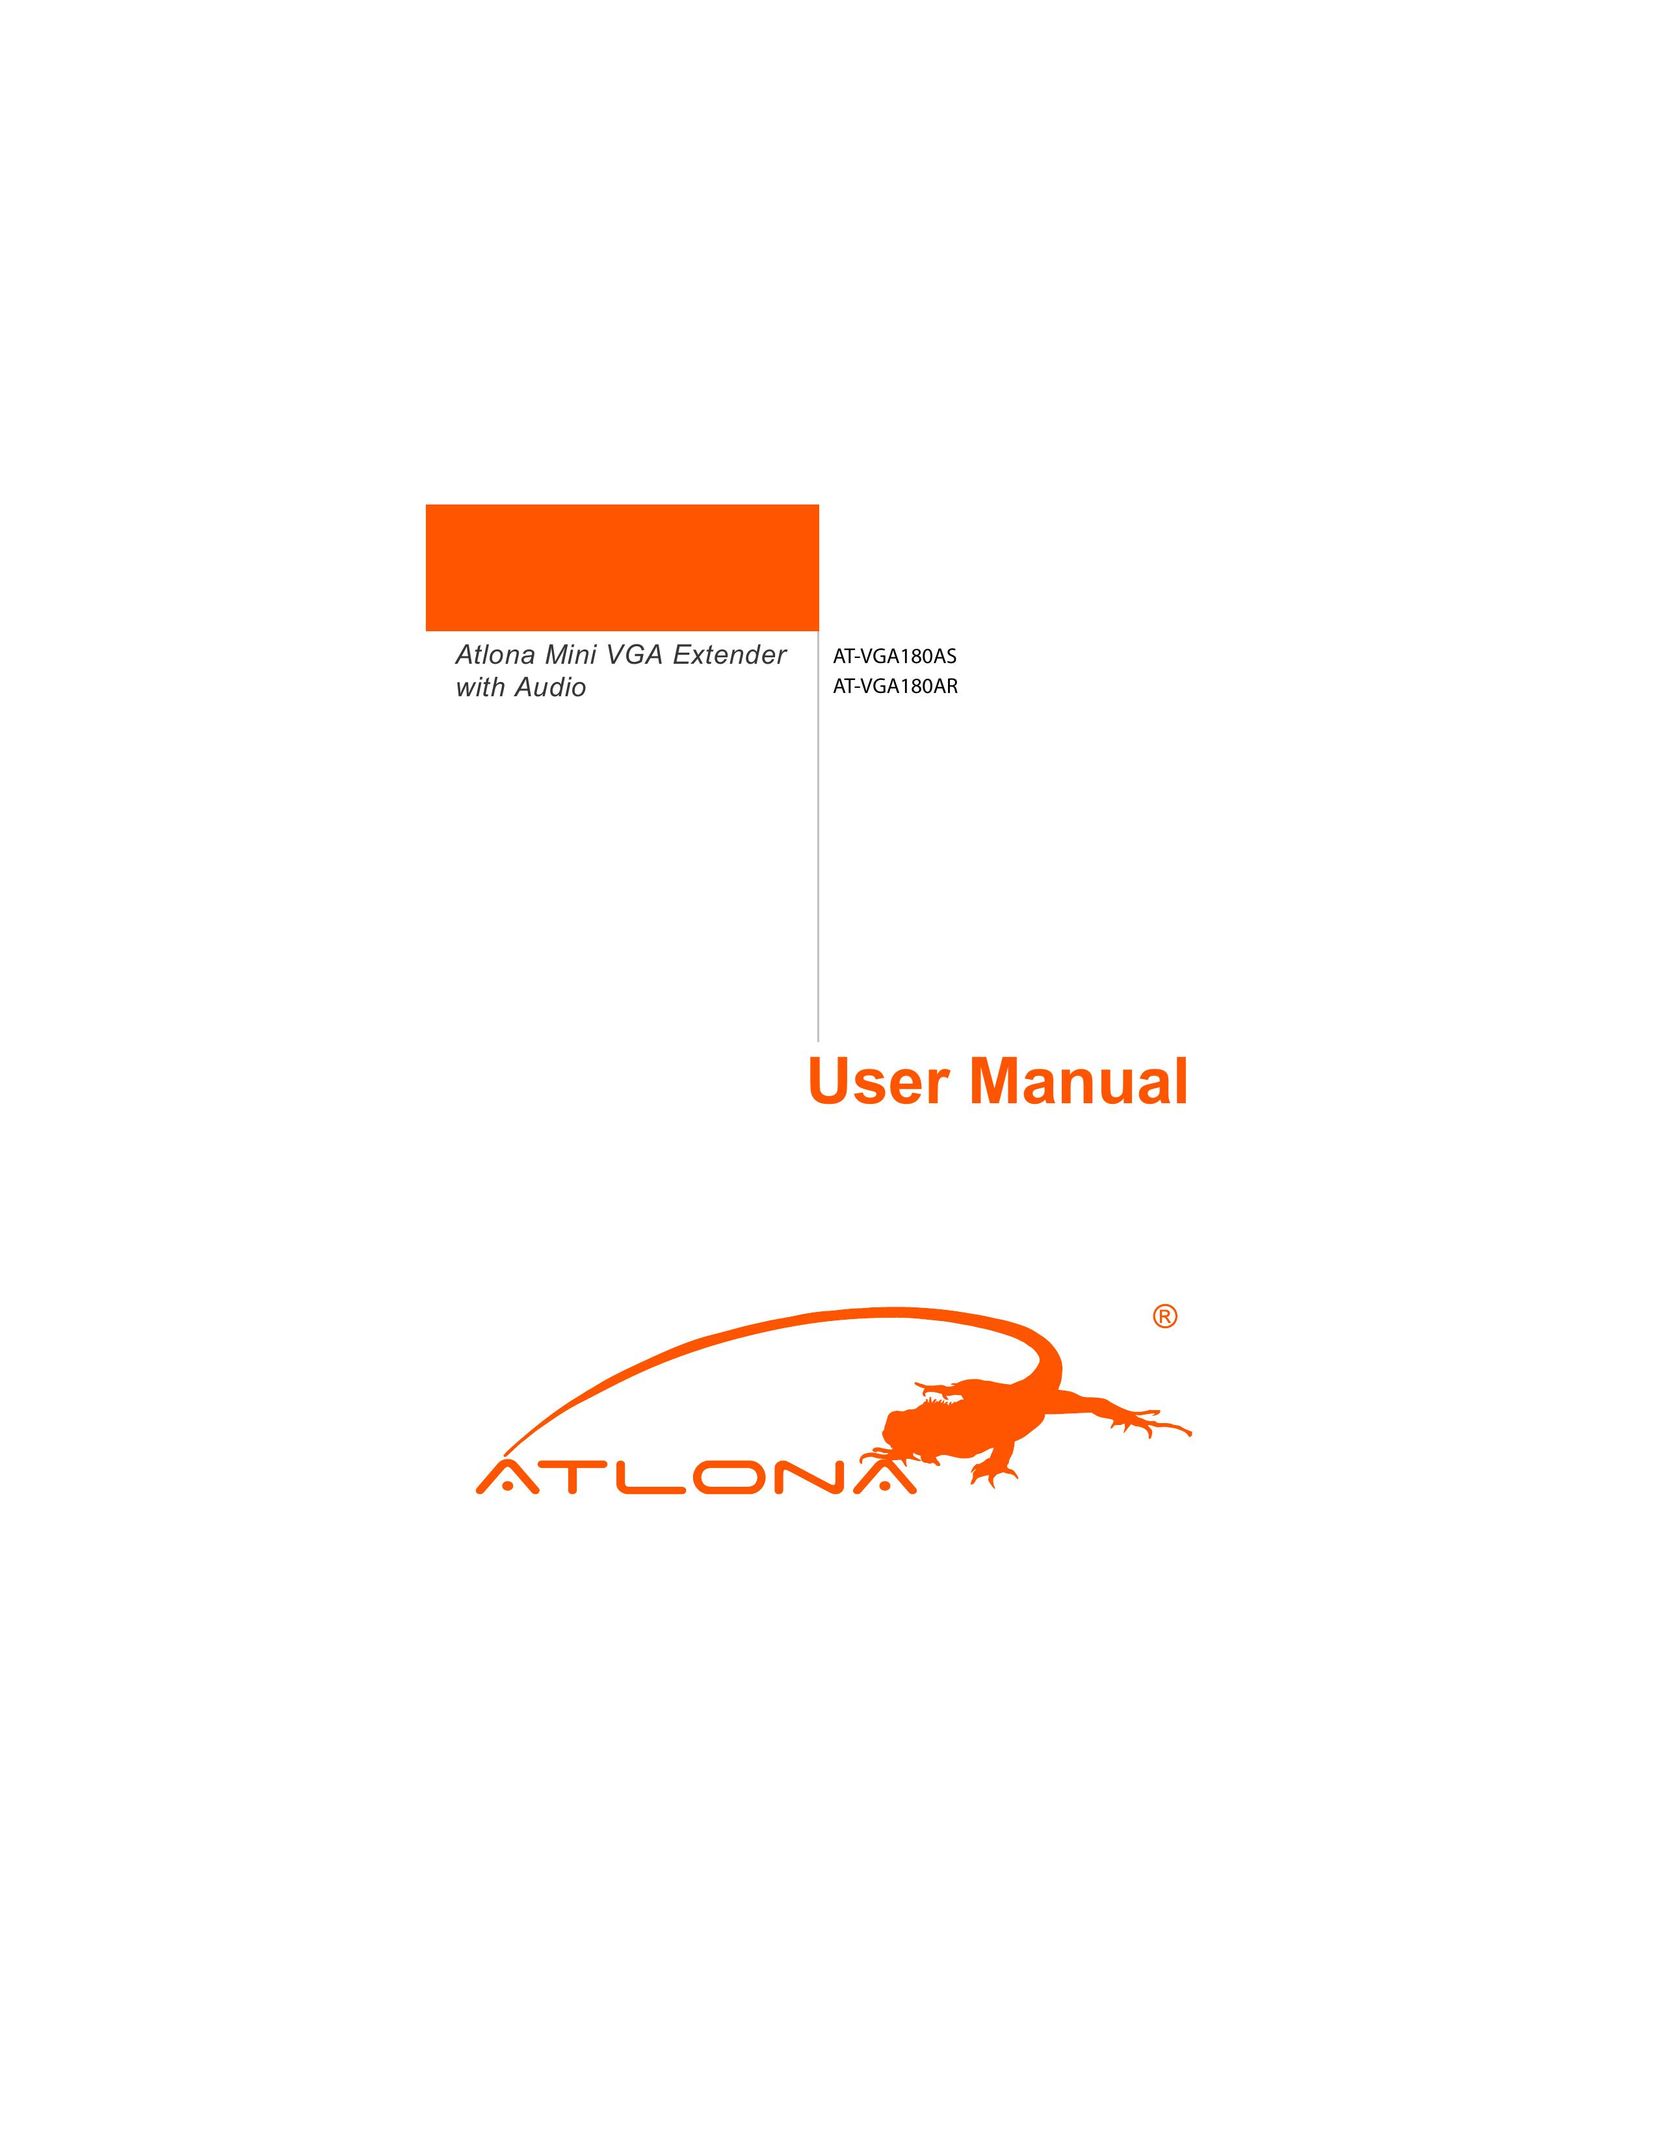 Atlona AT-VGA180AR Telephone User Manual